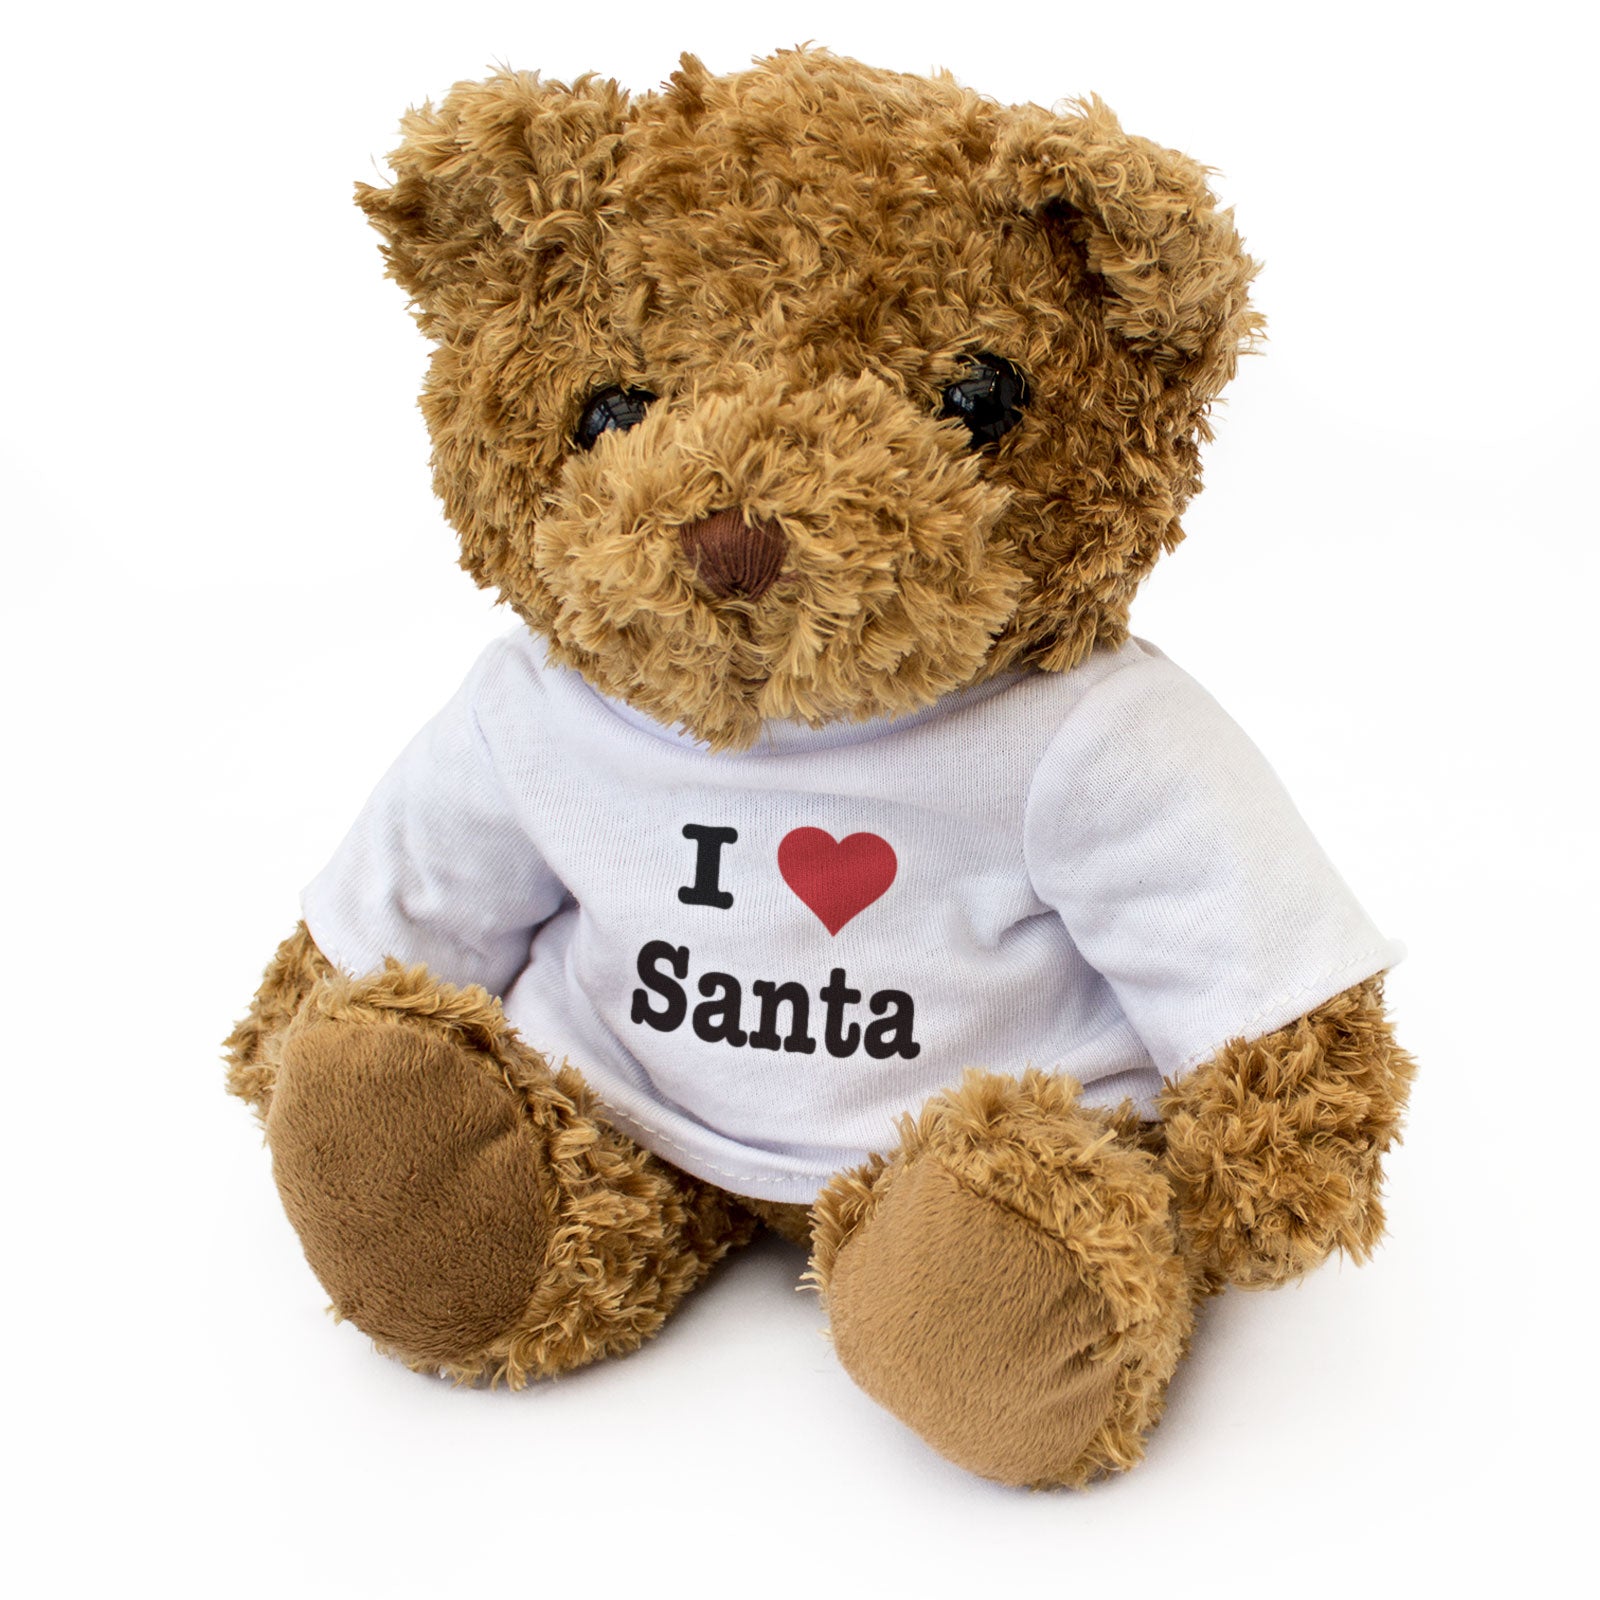 I Love Santa - Teddy Bear